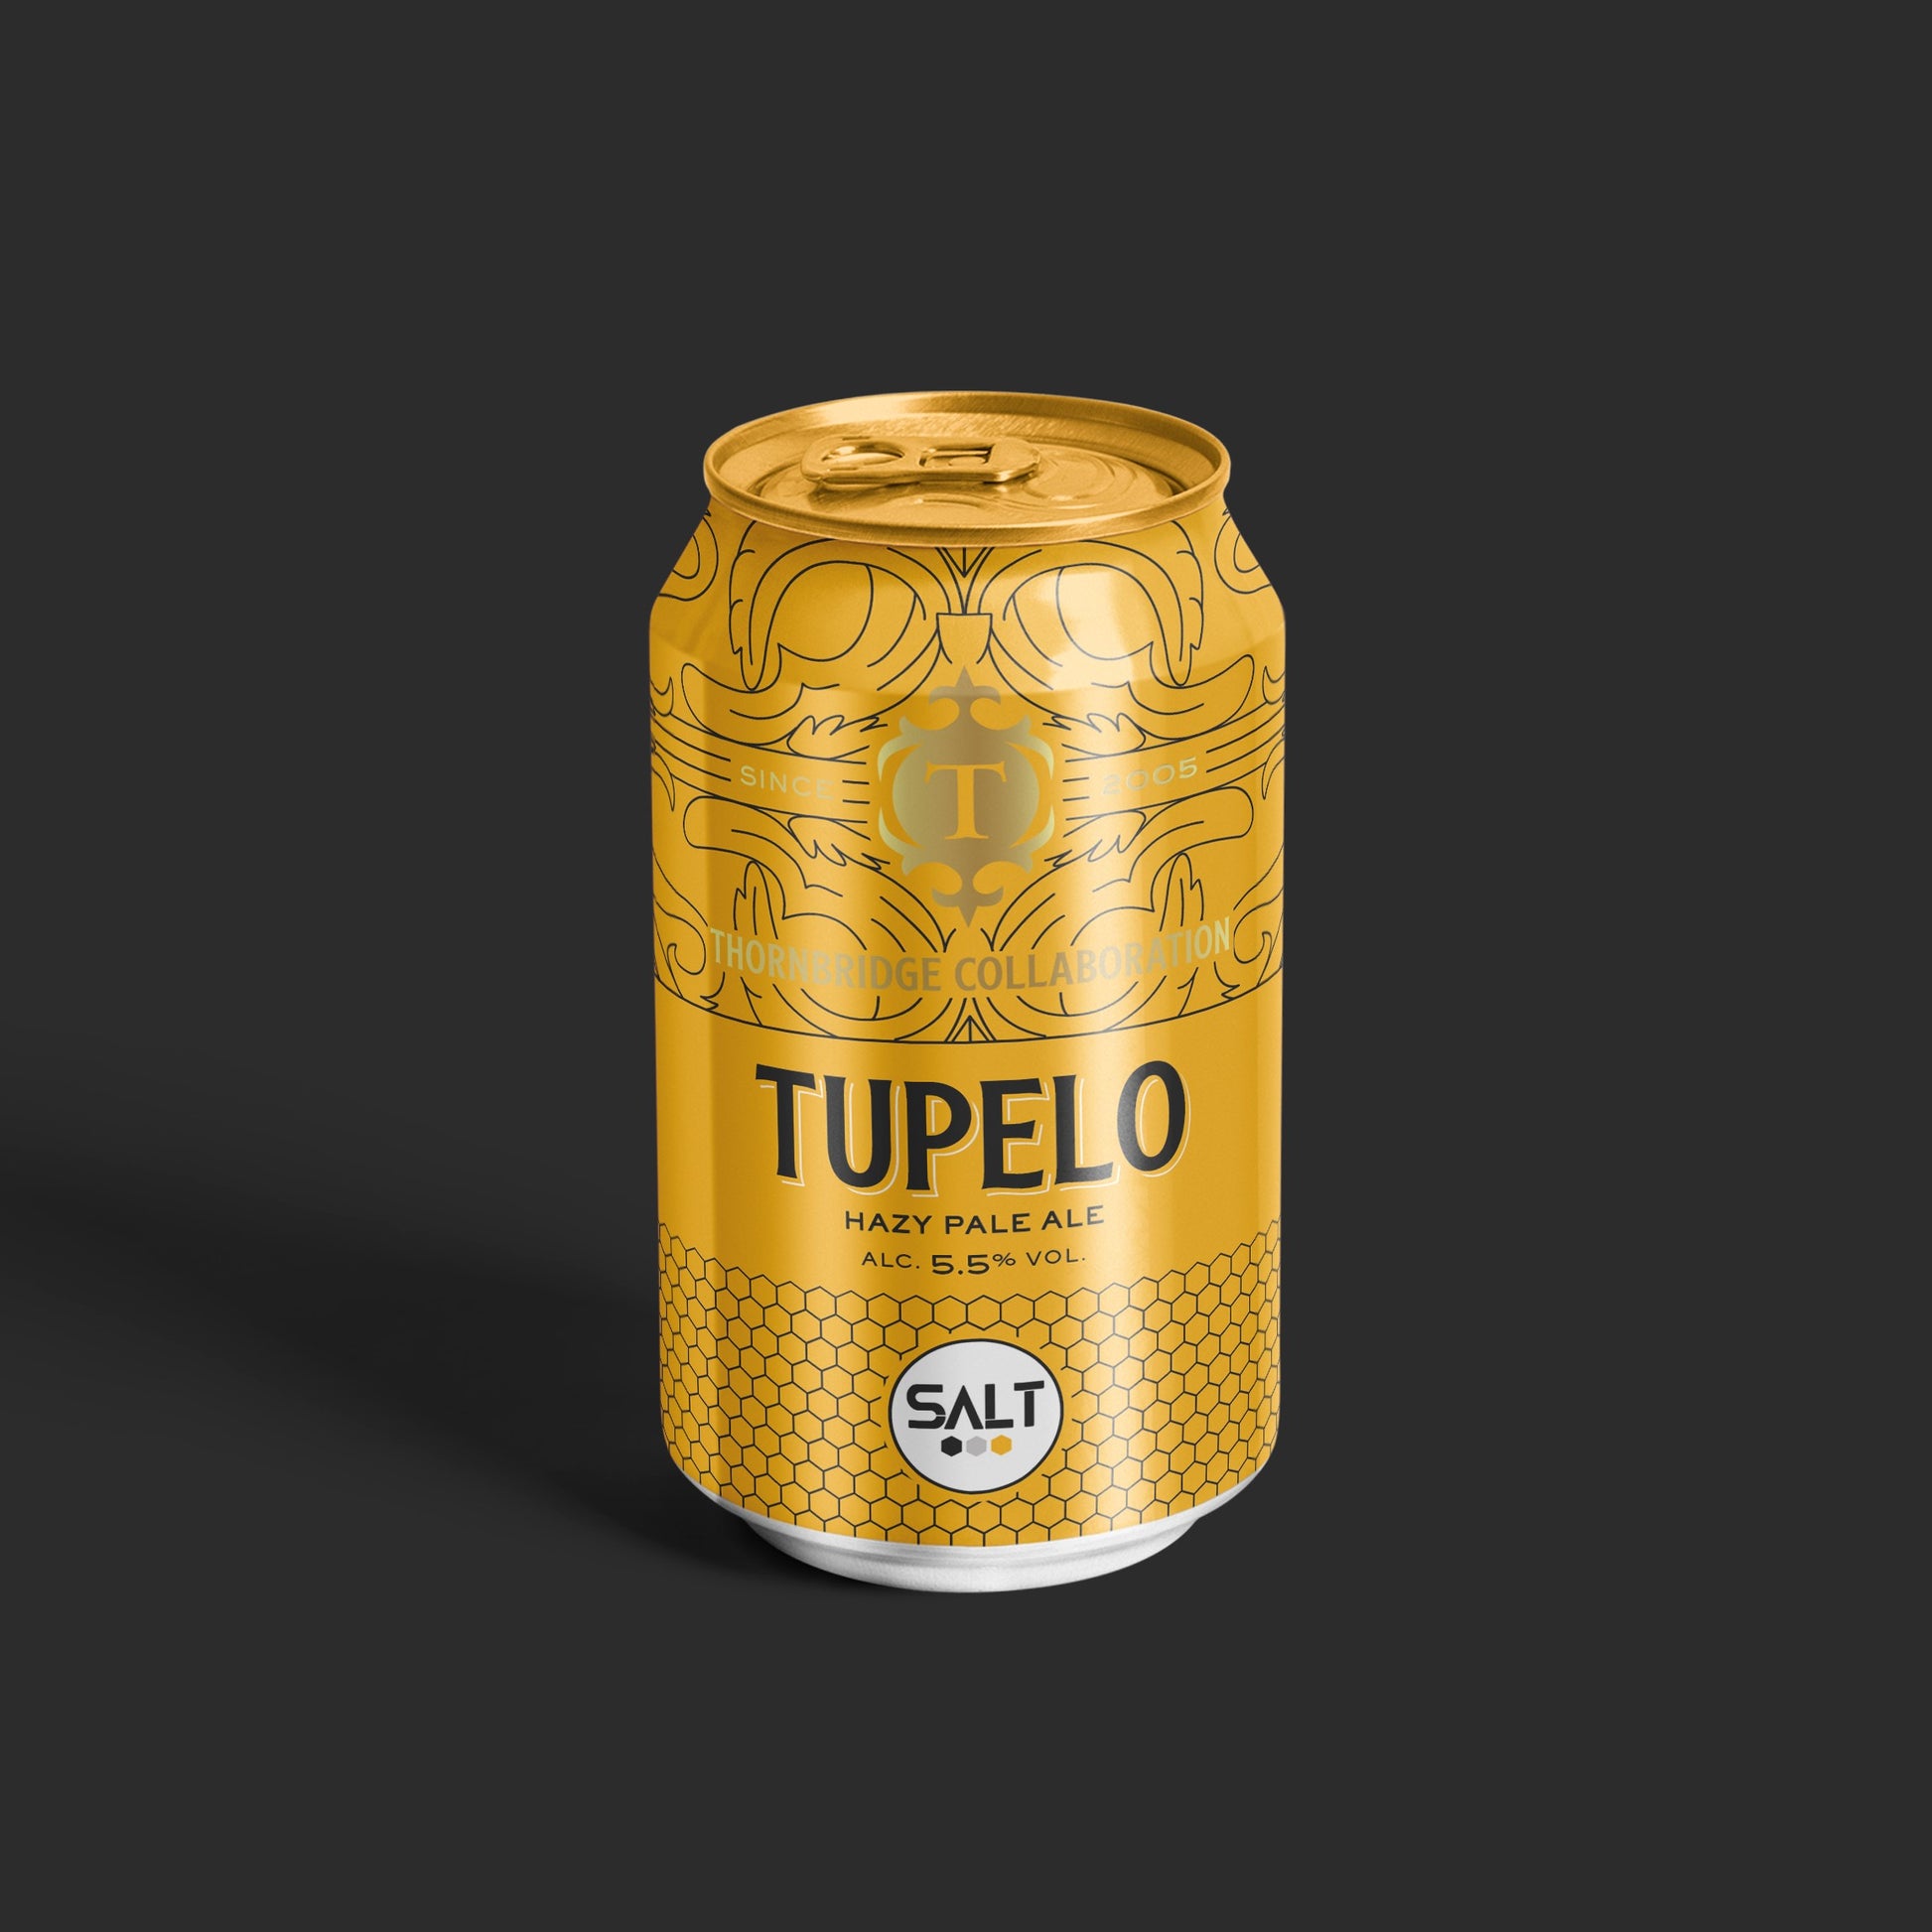 Tupelo, 5.5% Hazy Pale Ale Beer - Single Can Thornbridge